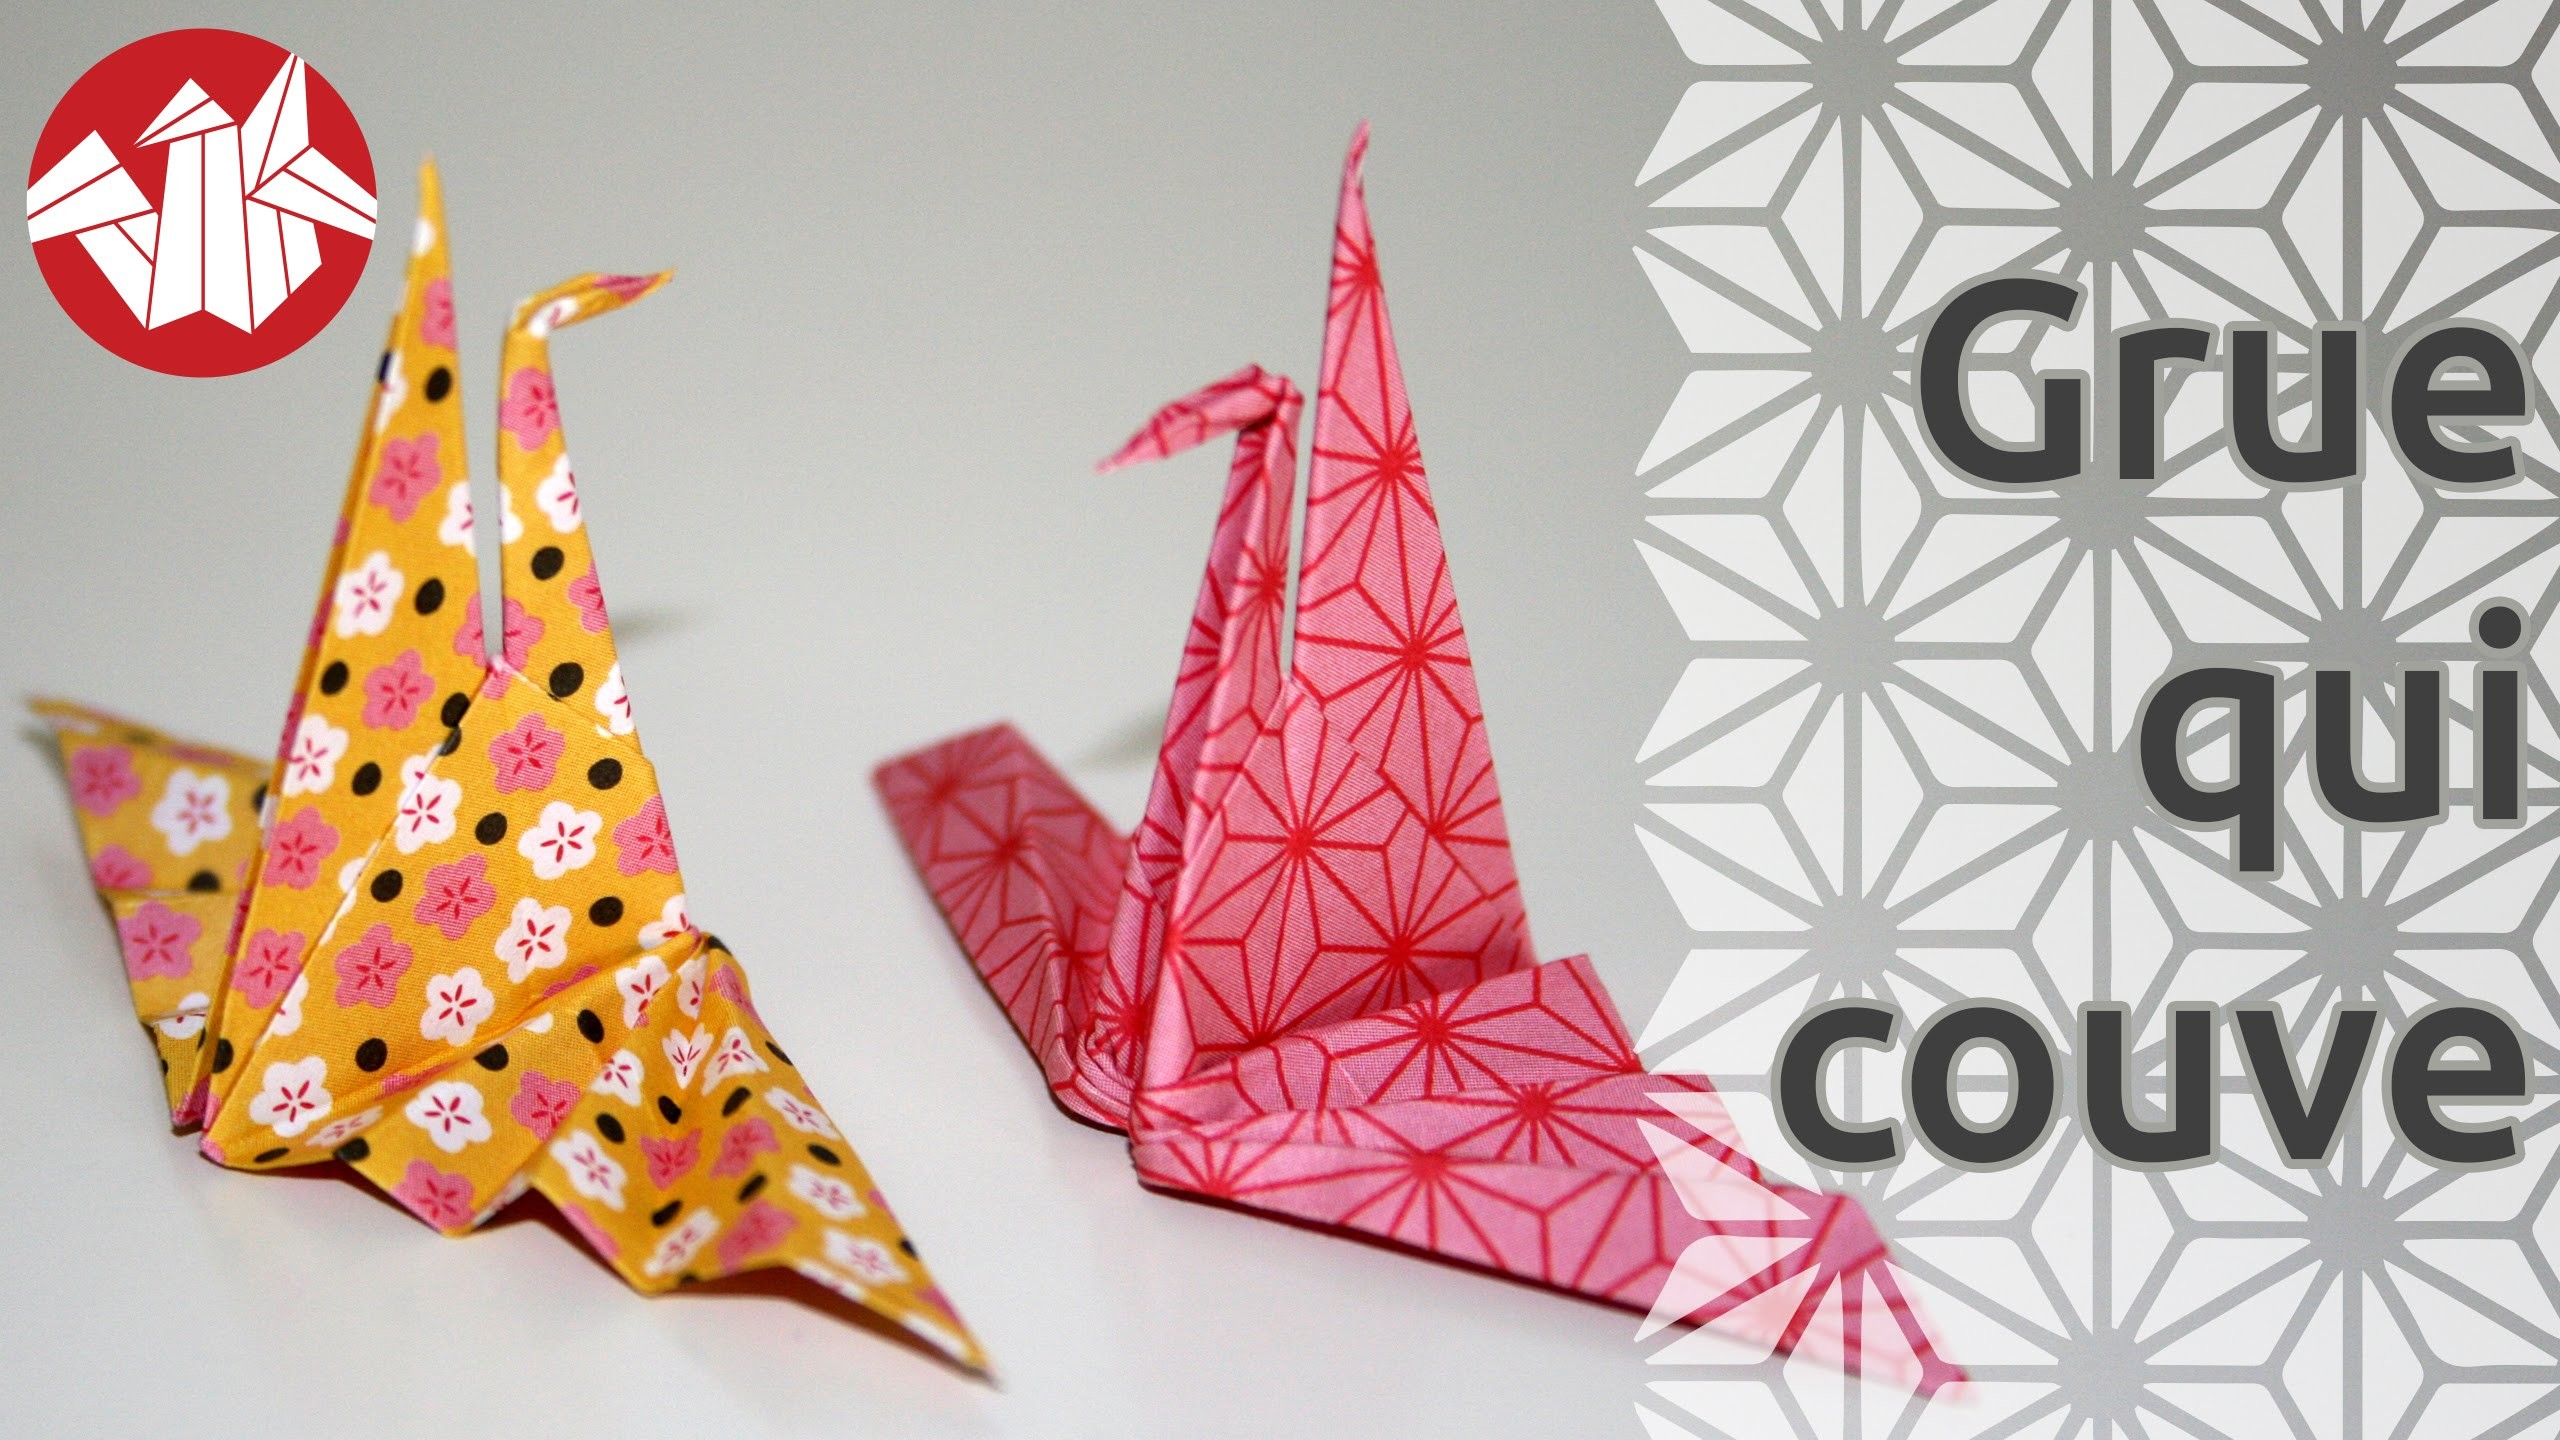 Origami - La grue qui couve - Hatching crane [Senbazuru]